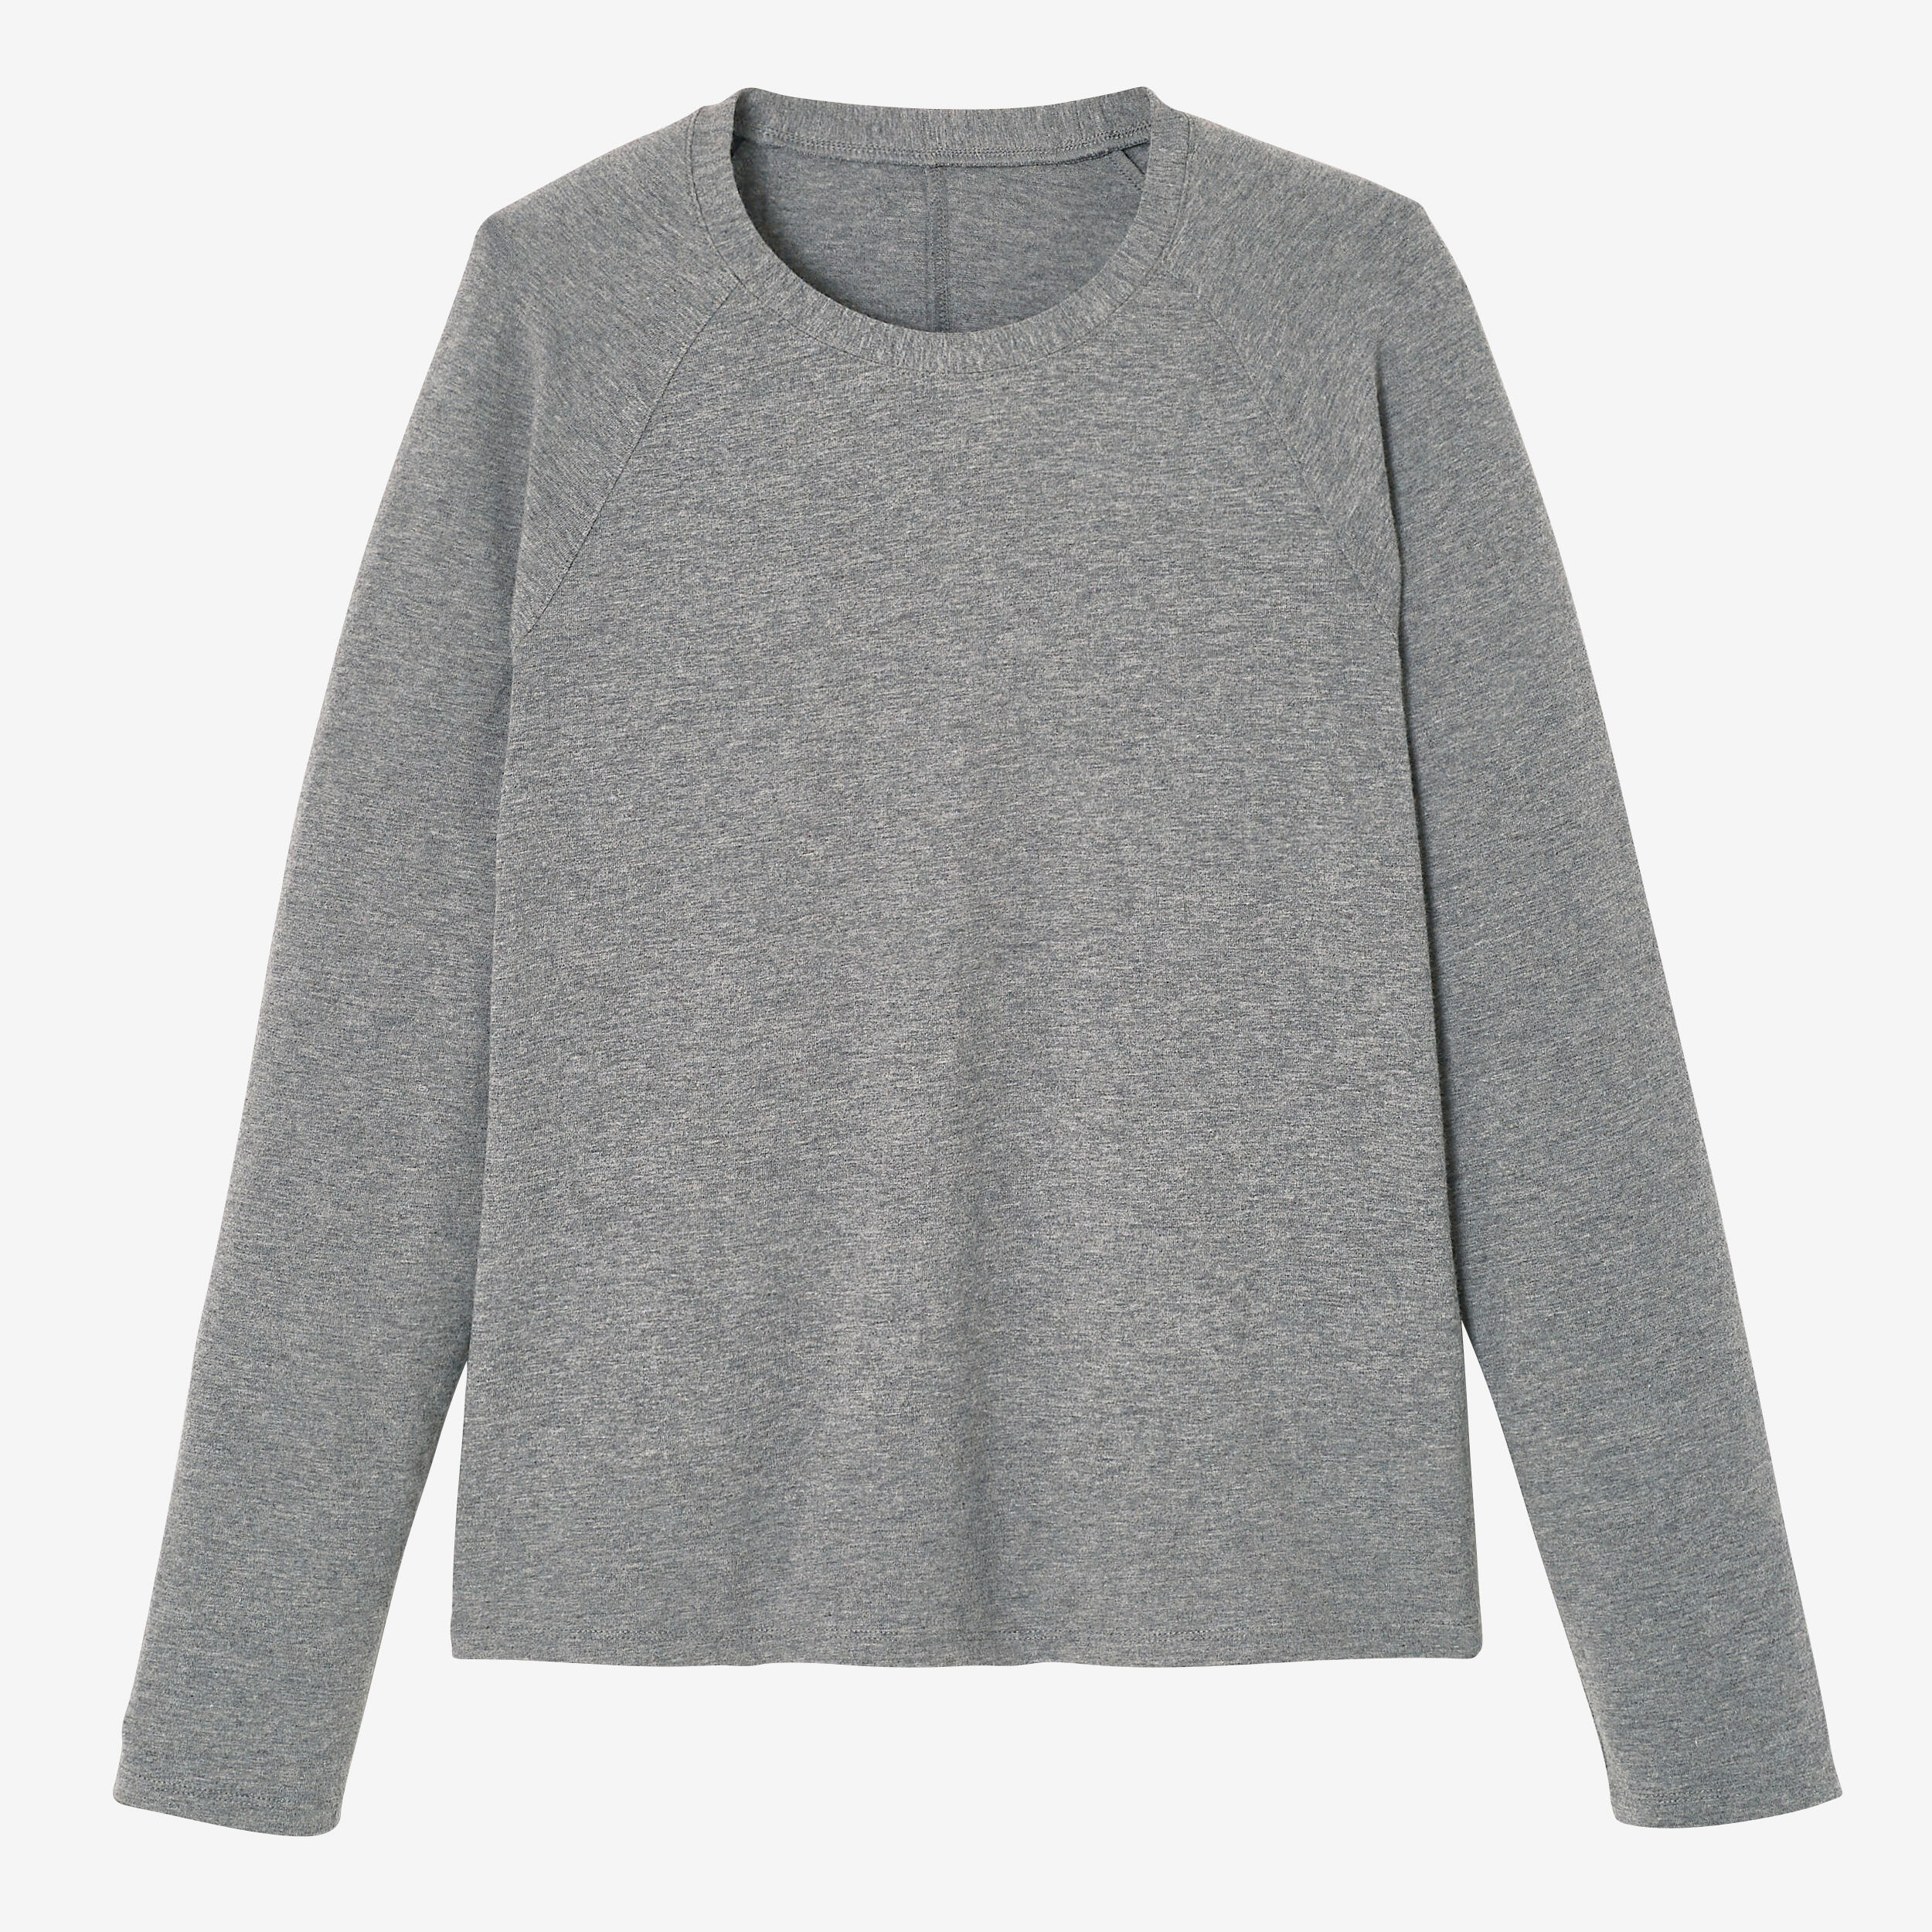 Women's Long-Sleeved Fitness T-Shirt 500 - Grey 6/6